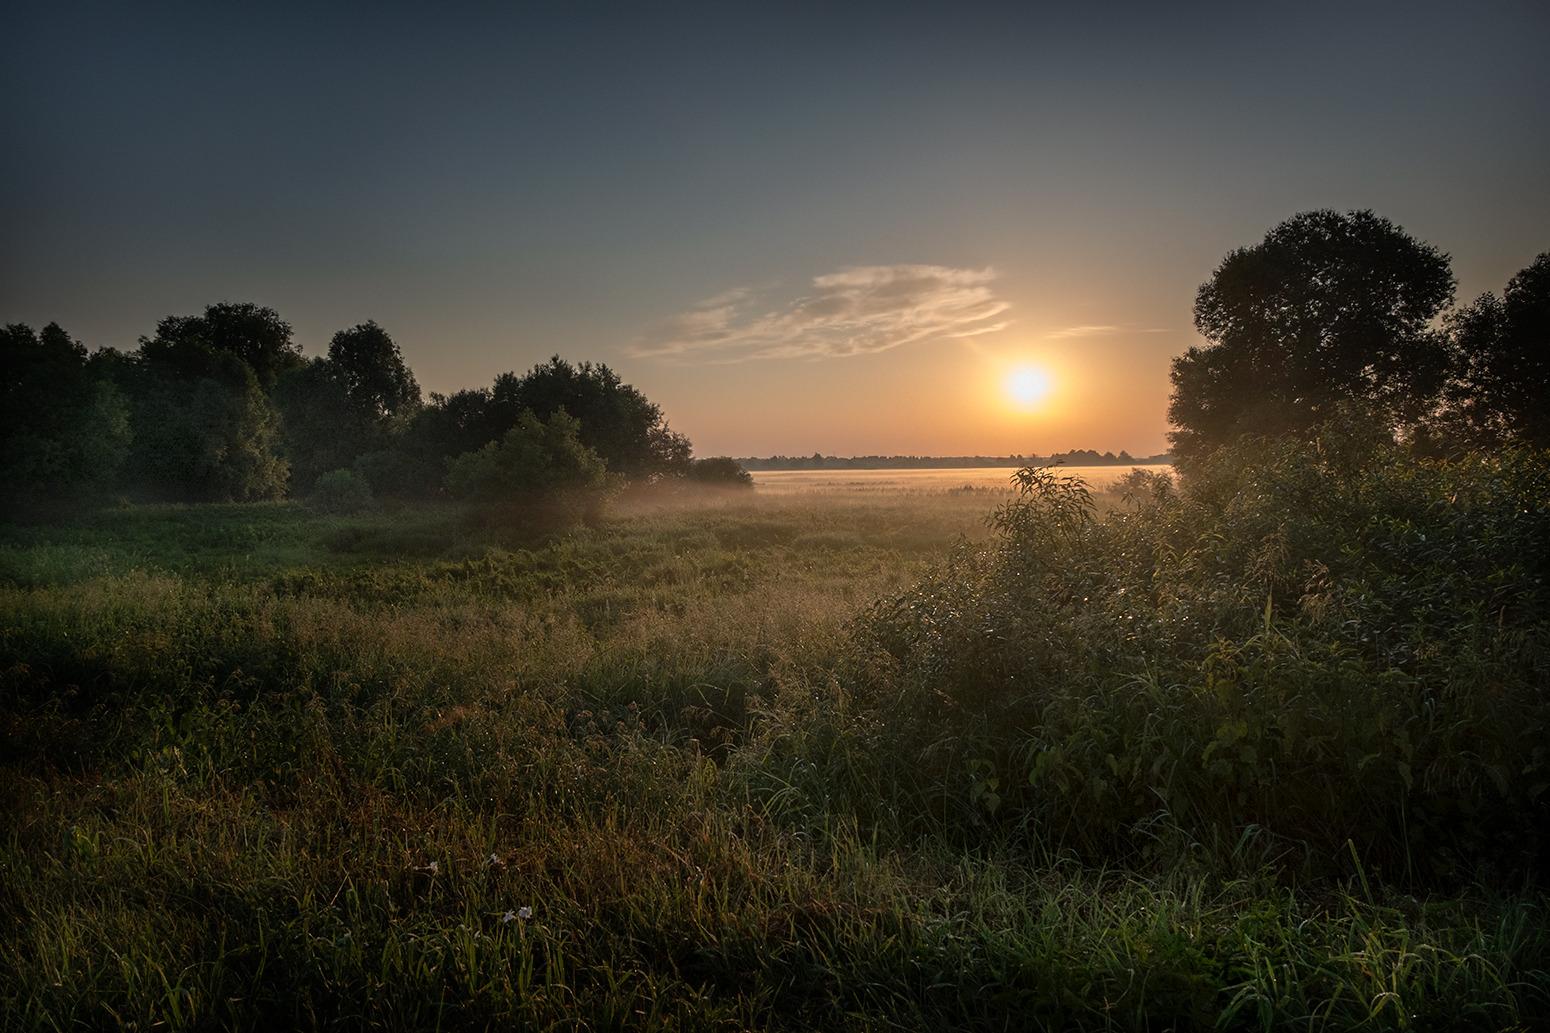 Восход за городом | Фотограф Александр Шатохин | foto.by фото.бай